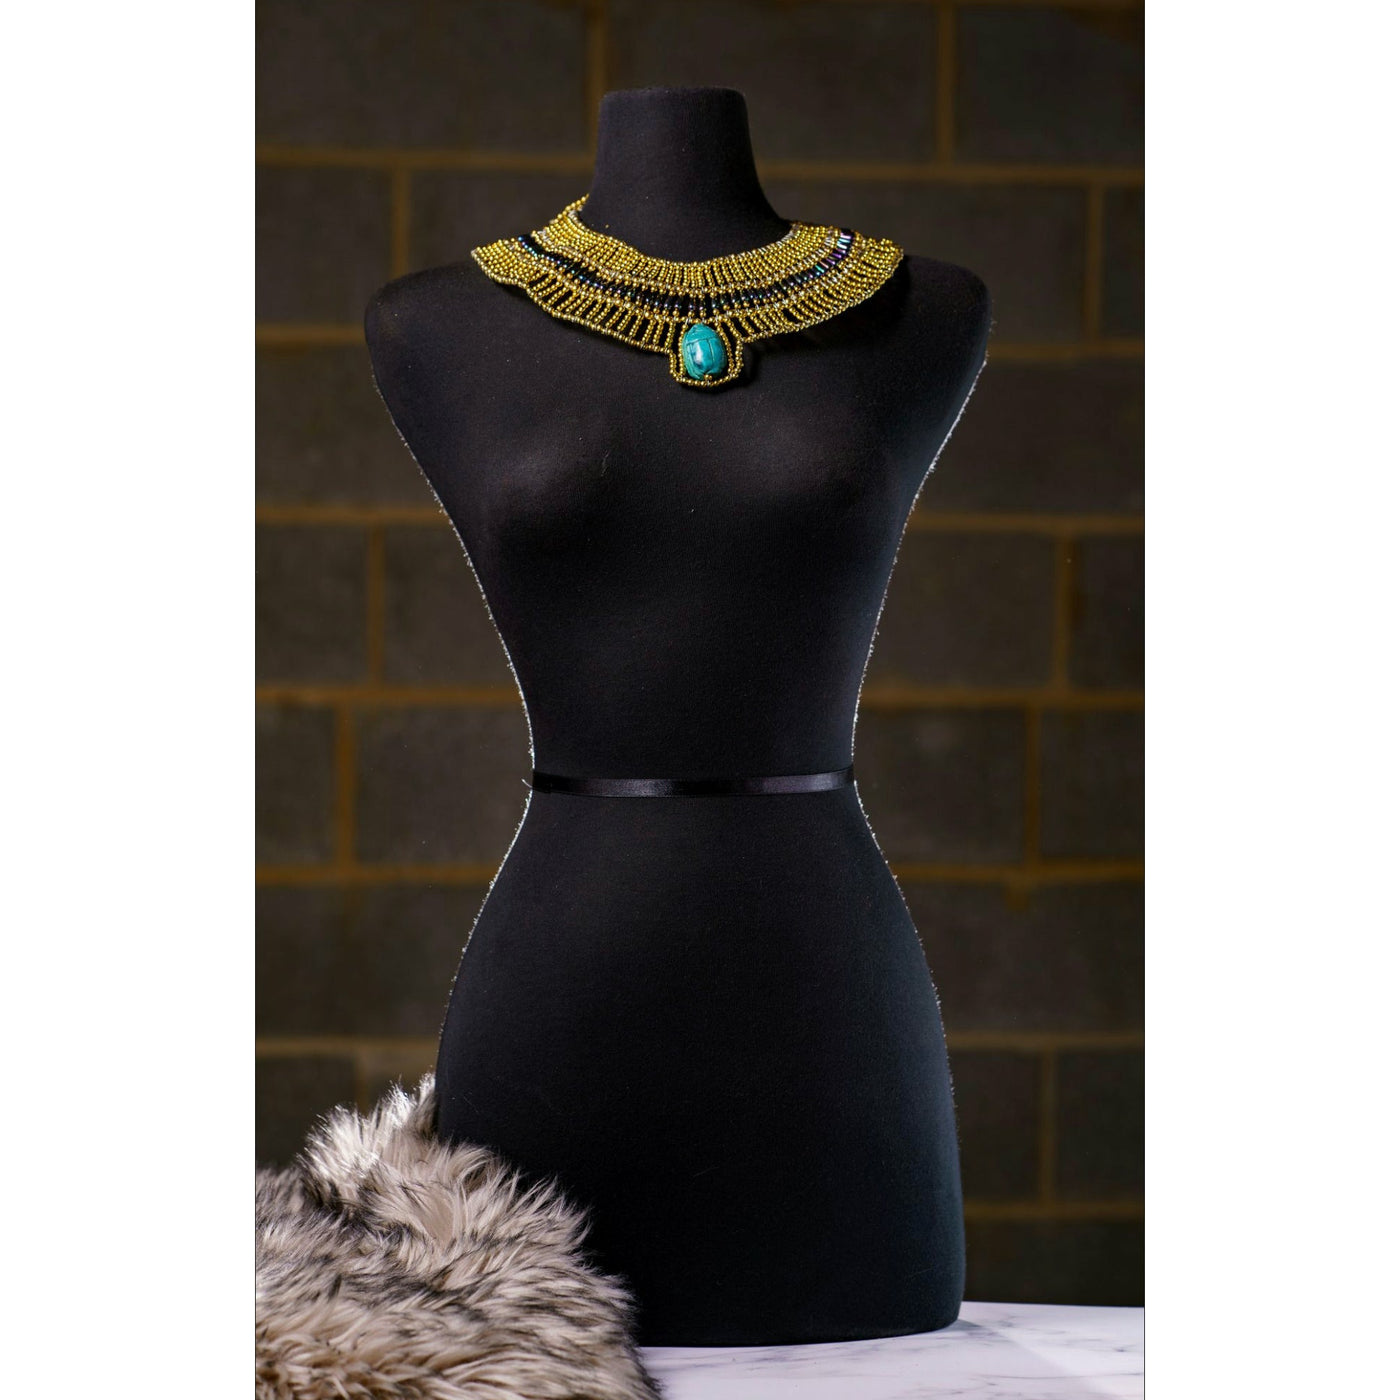 Sample: The Nefertiti Bib necklace